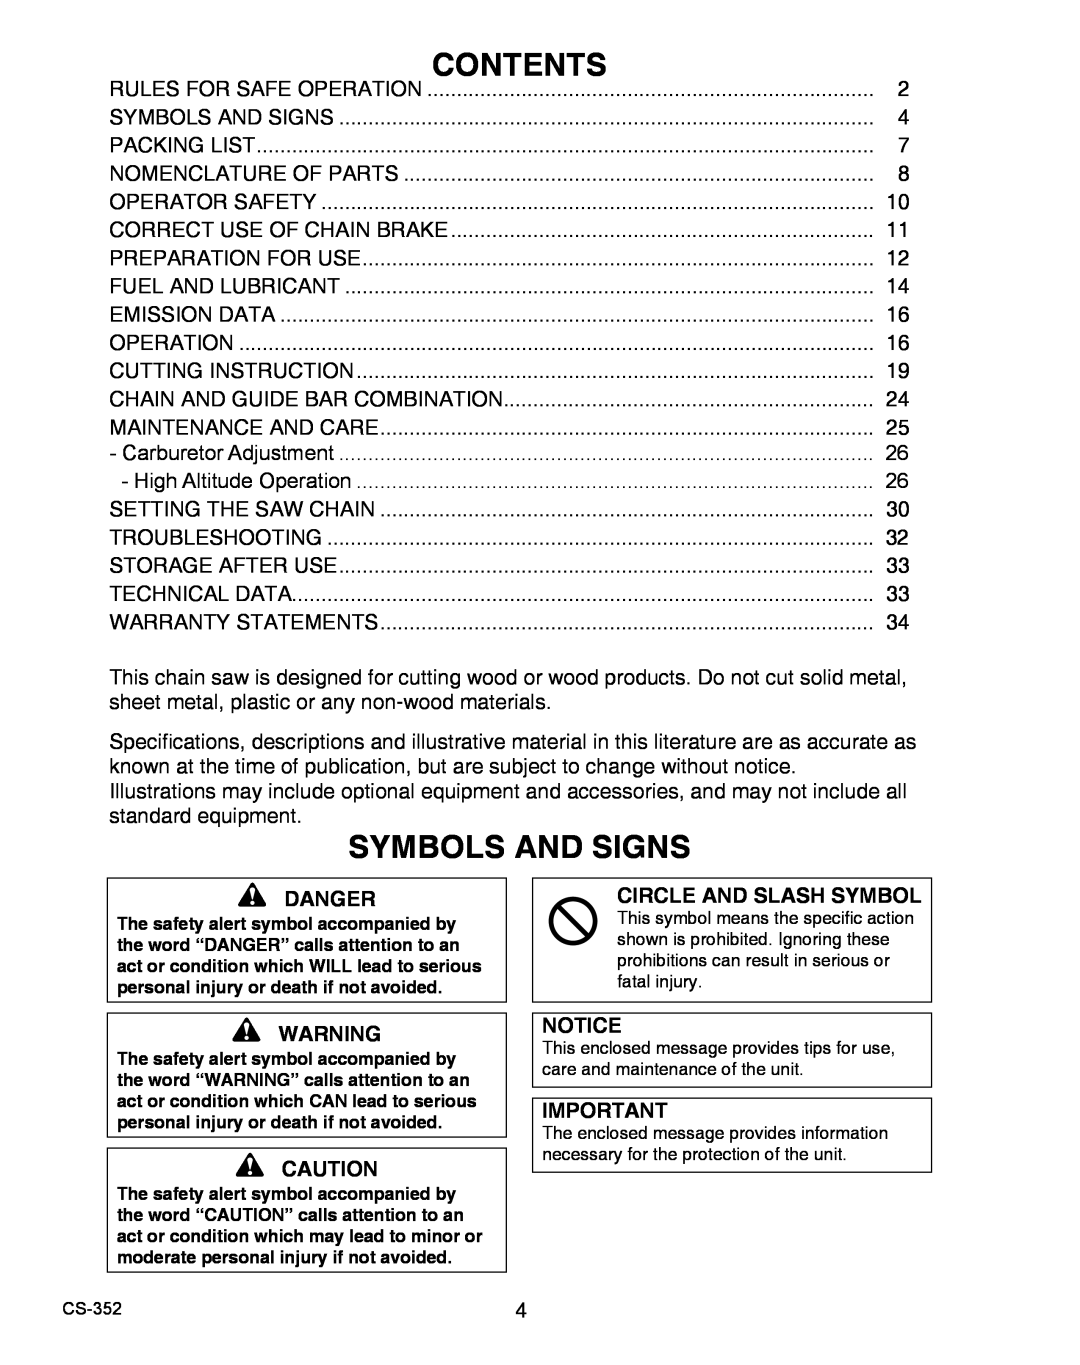 Echo X750020201 instruction manual Contents, Symbols And Signs, Danger, Circle And Slash Symbol 